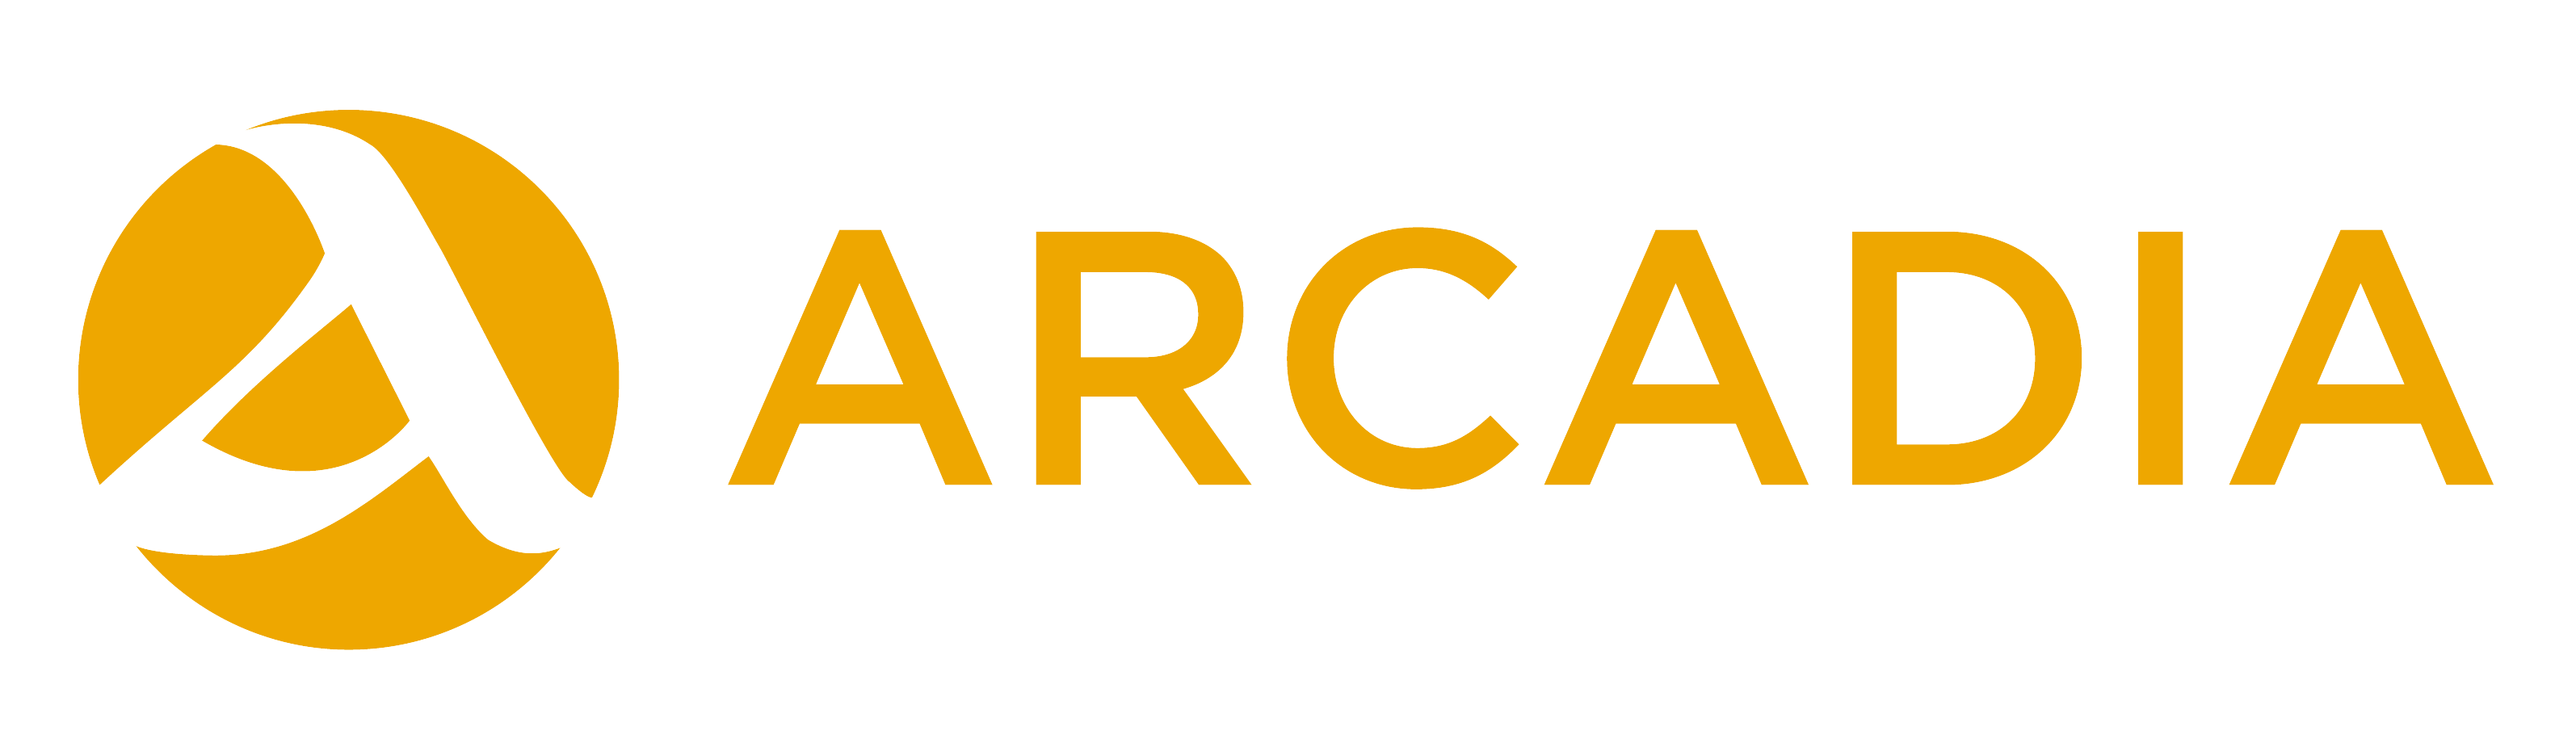 Arcadia Fund